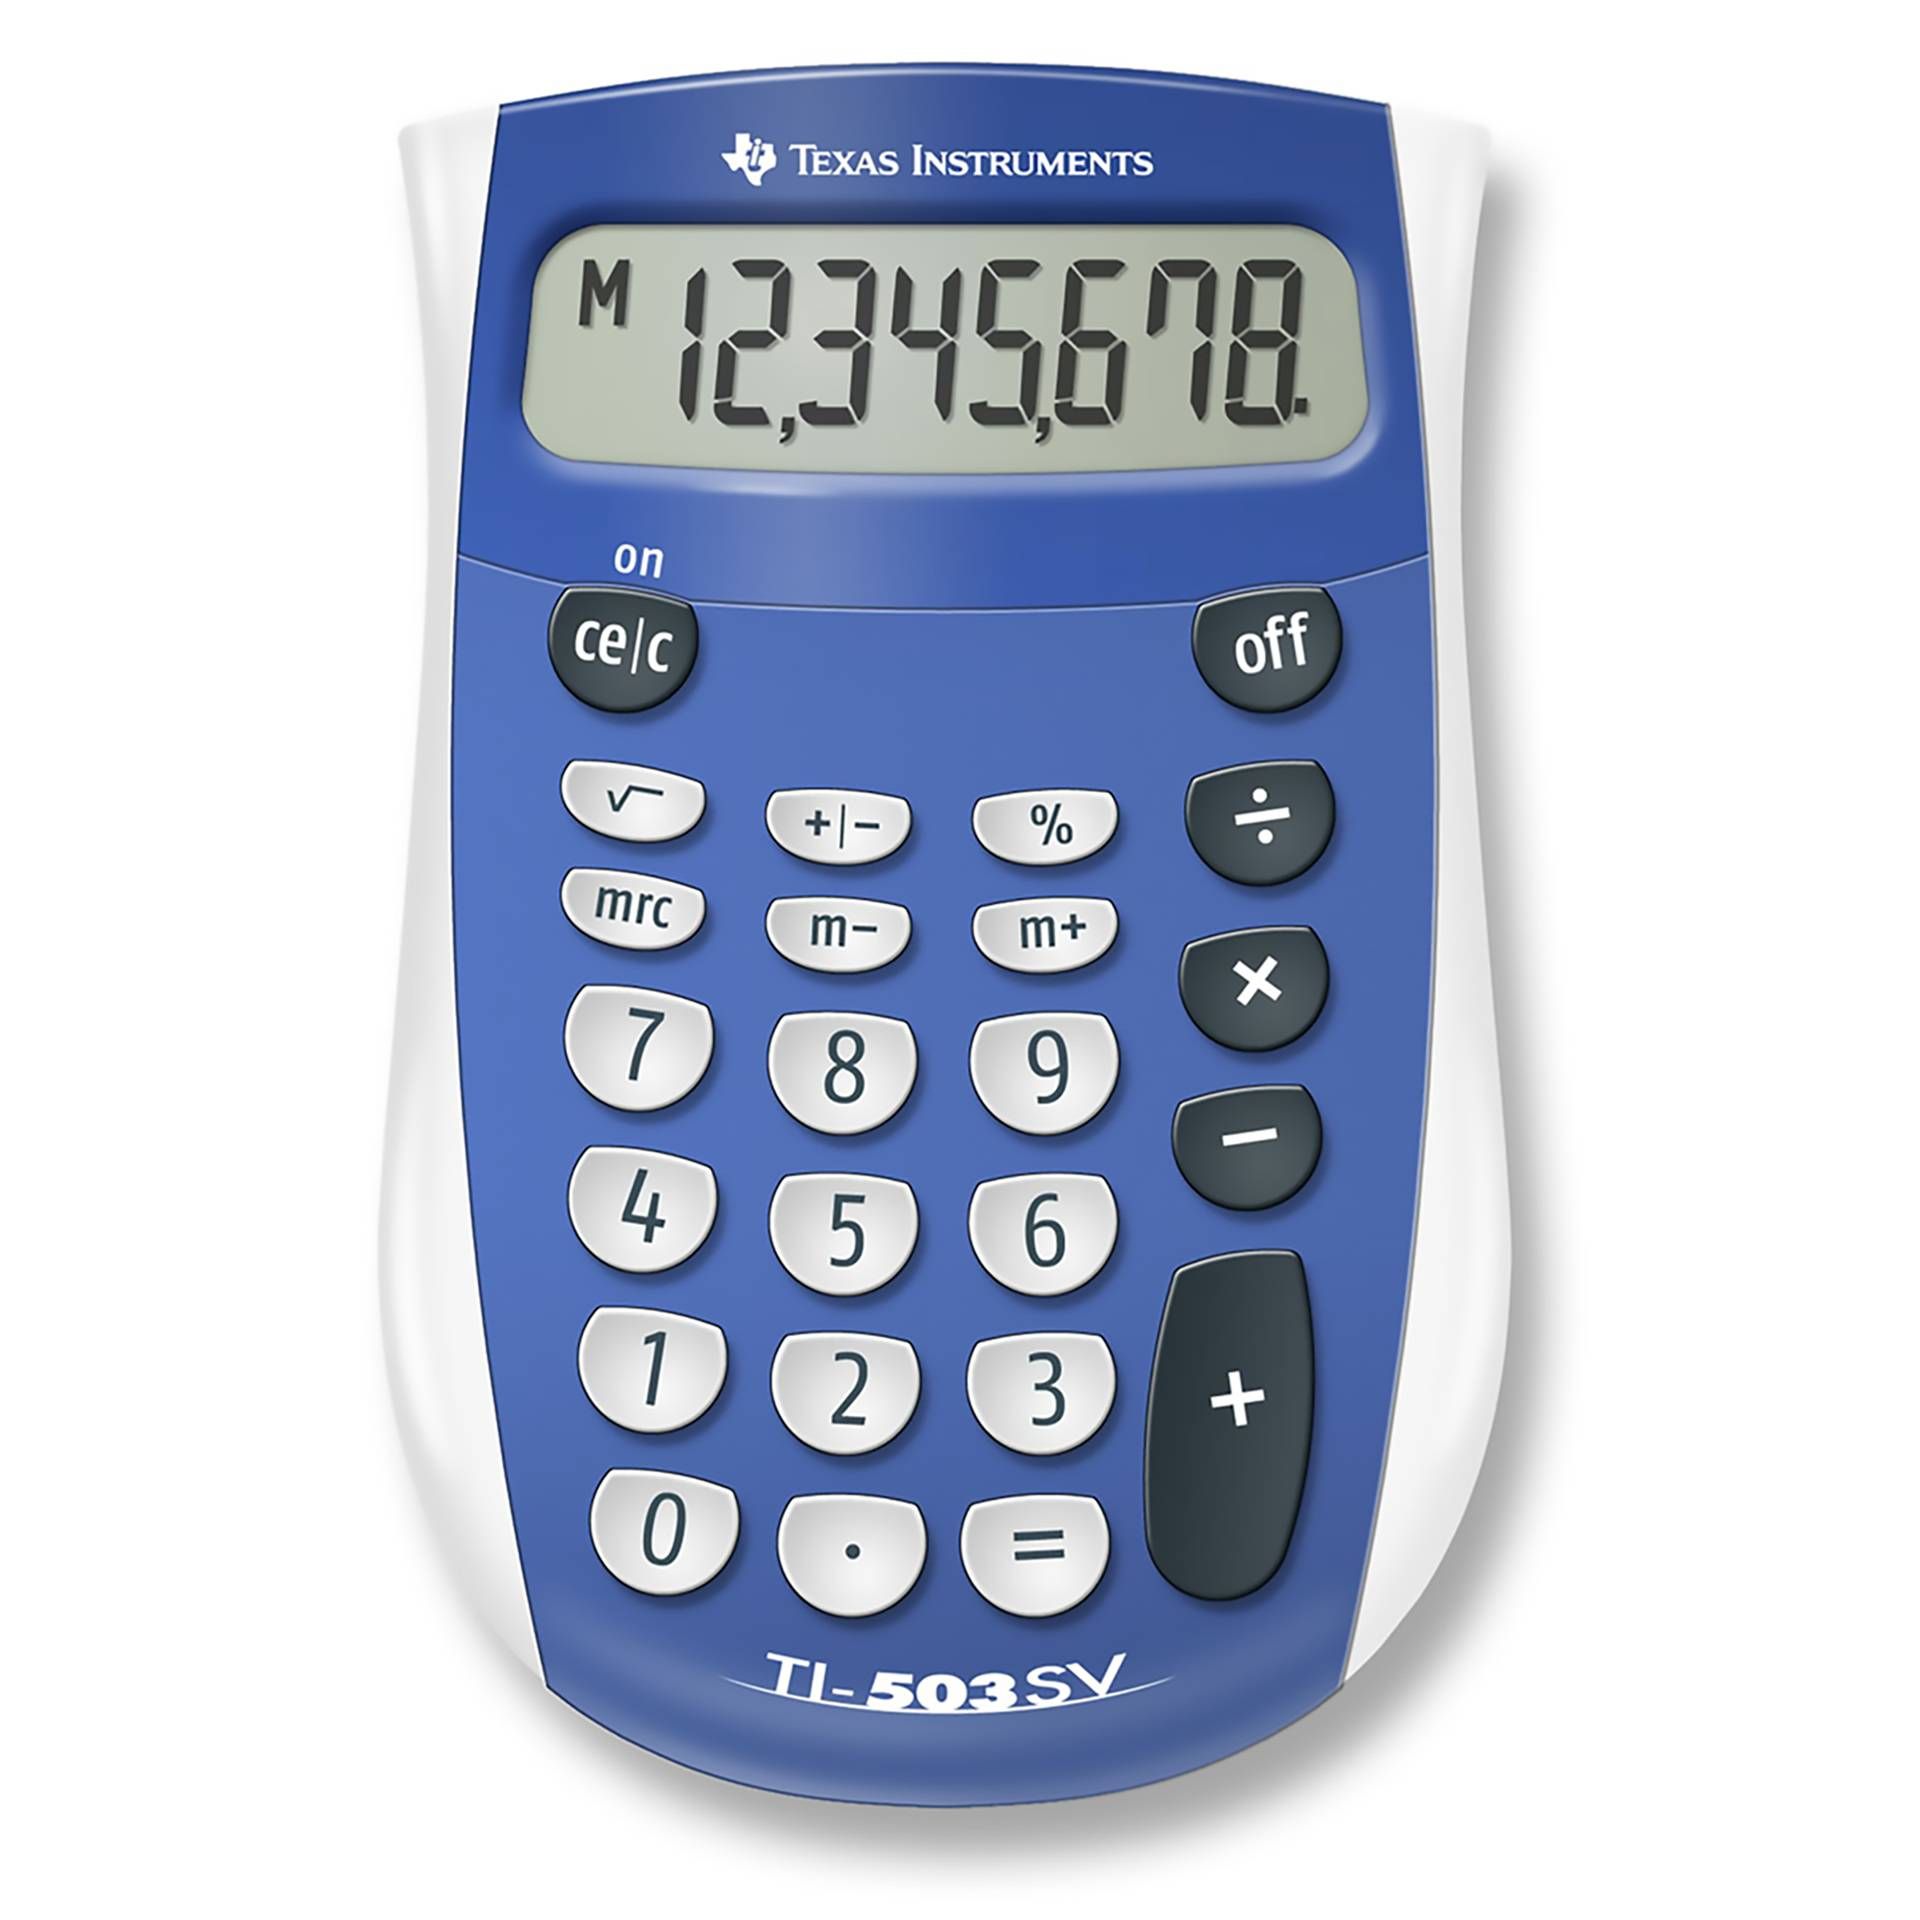 Texas Instruments TI 503 SV